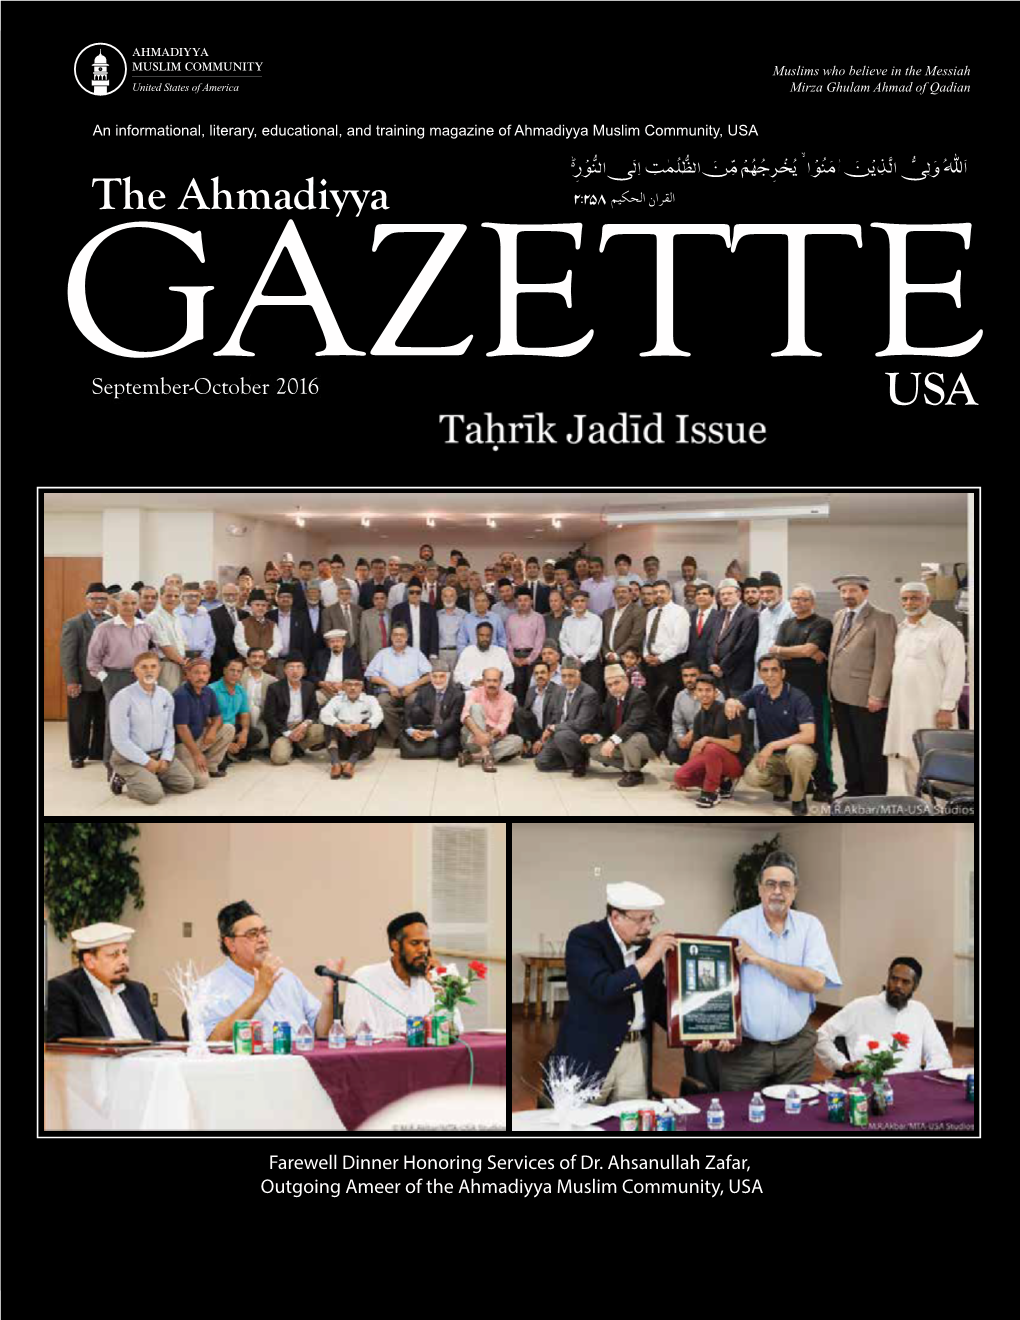 The Ahmadiyya Gazette USA